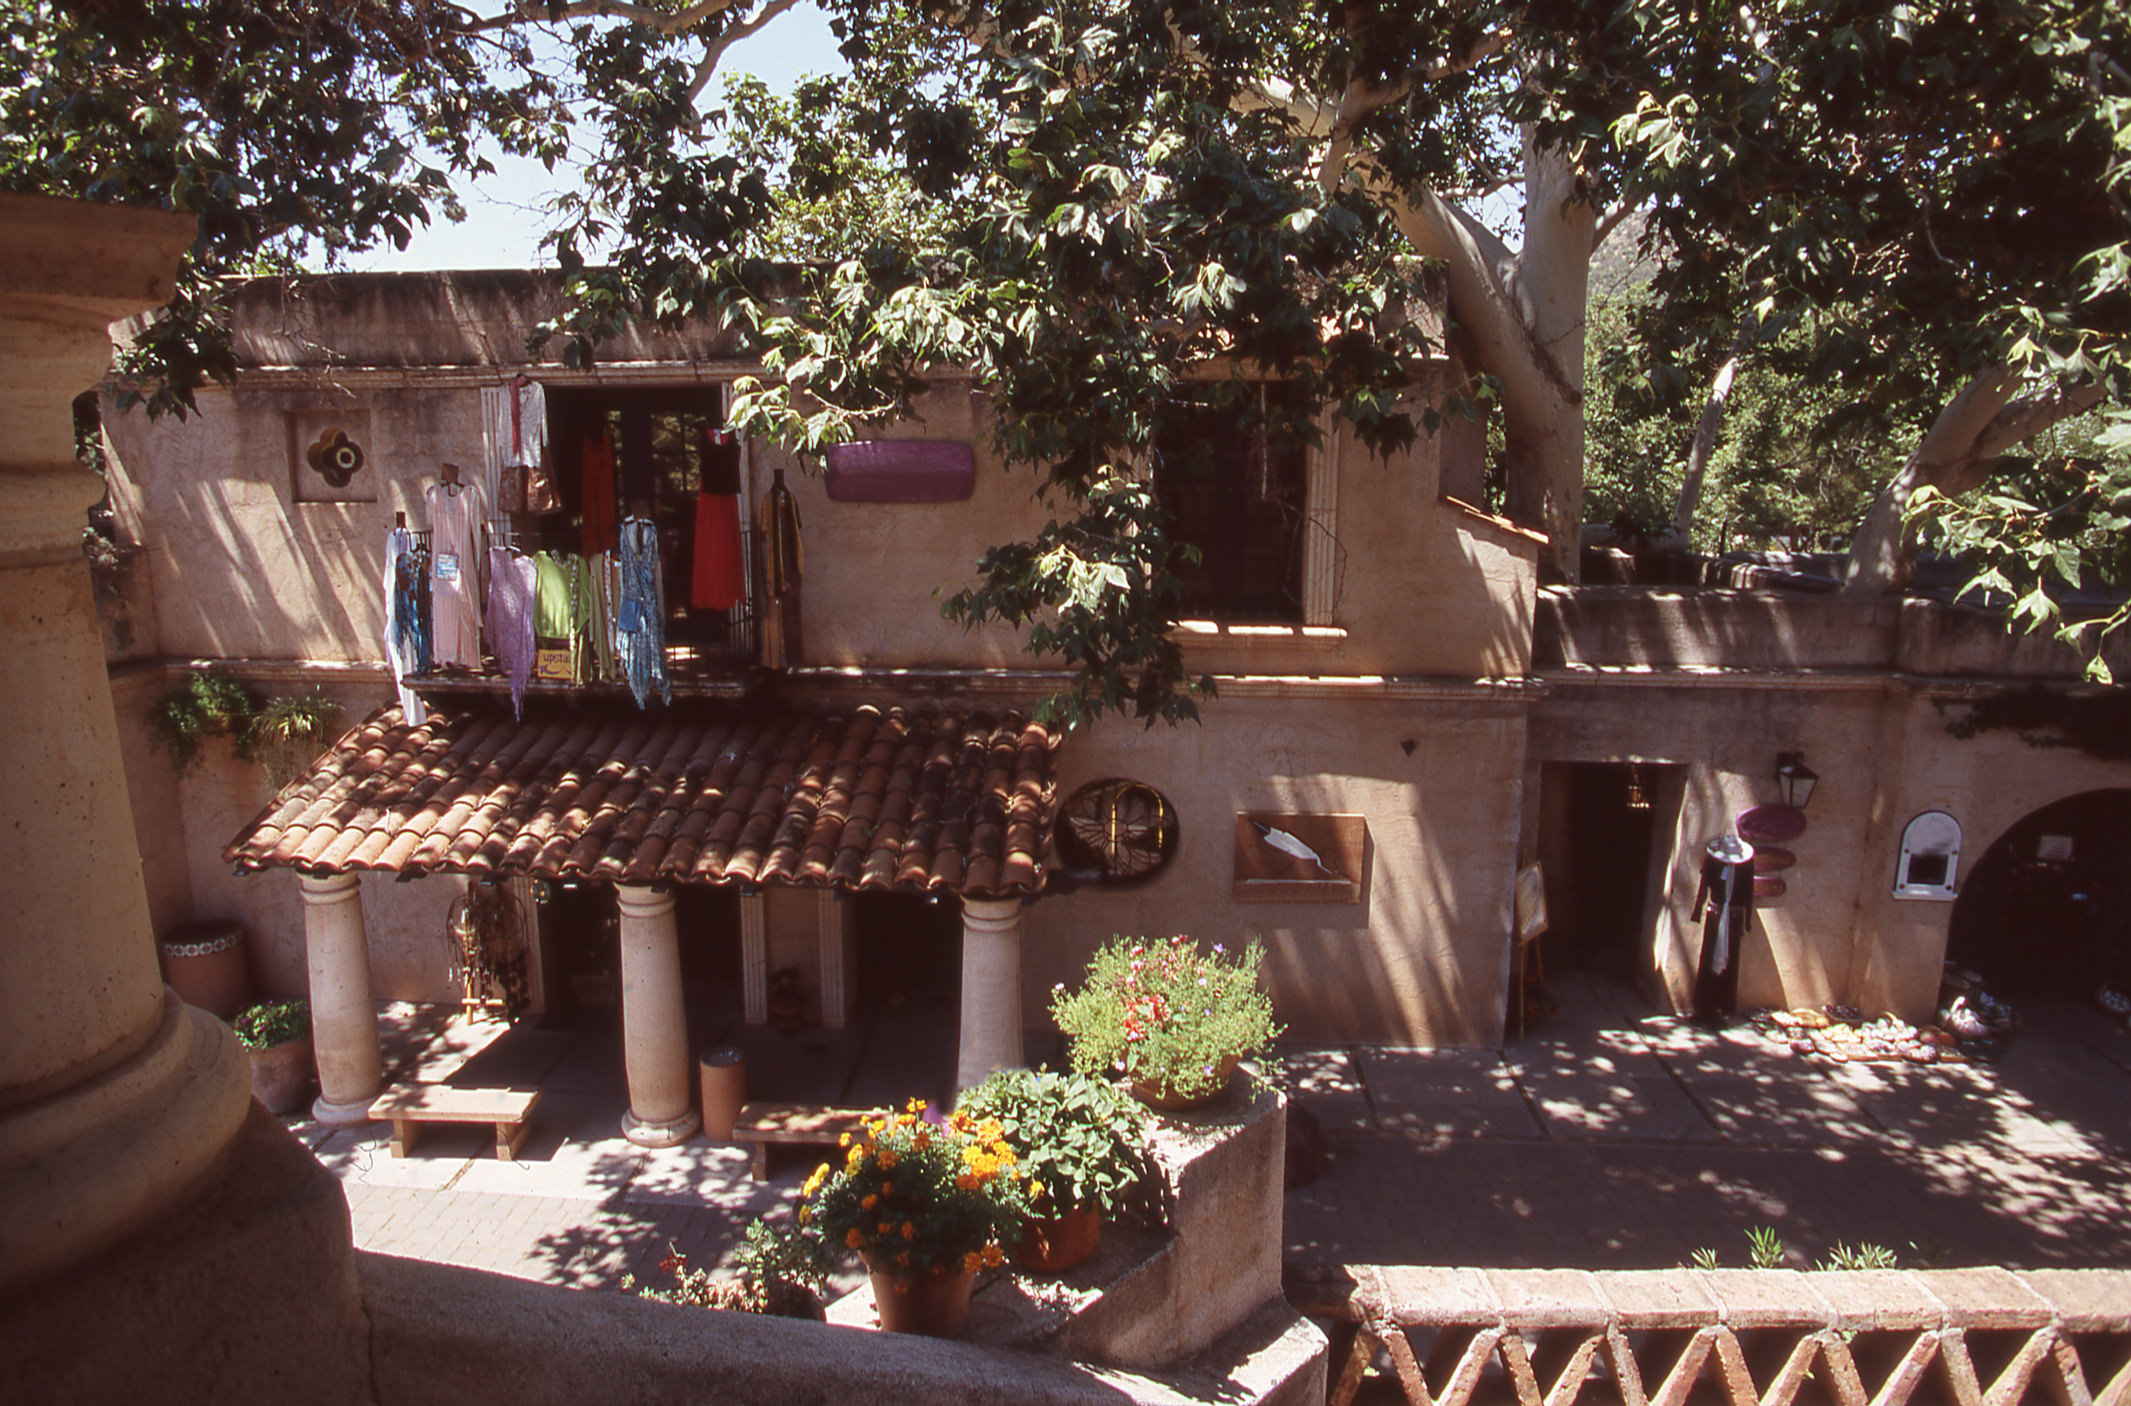 Spanish-style adobe architecture in Tlaquepaque Village Sedona Arizona